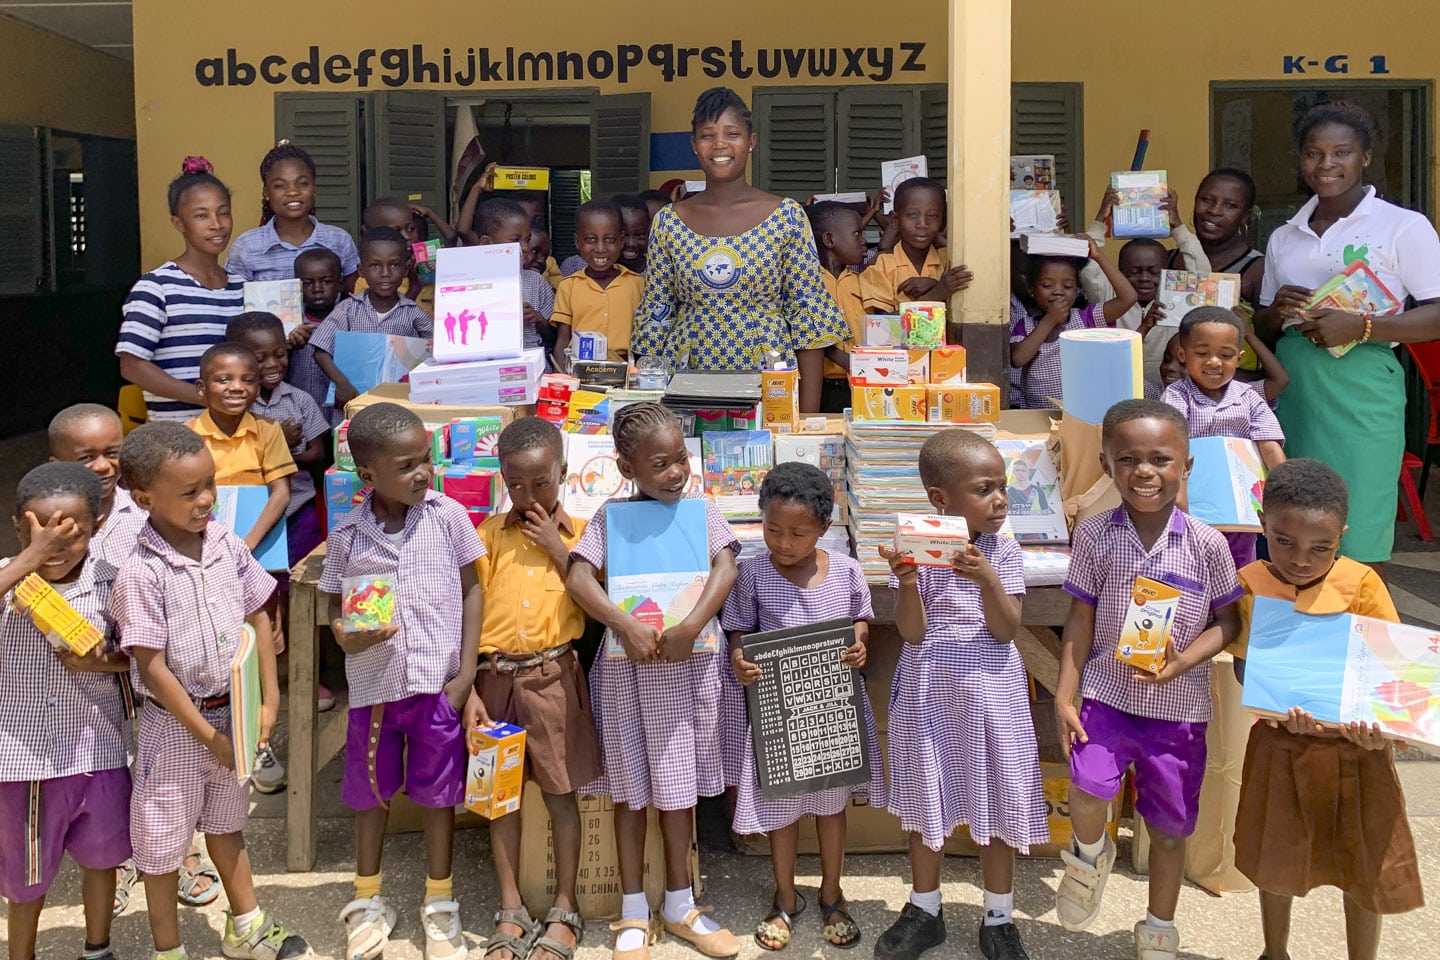 Barn med skolmaterial i Ghana